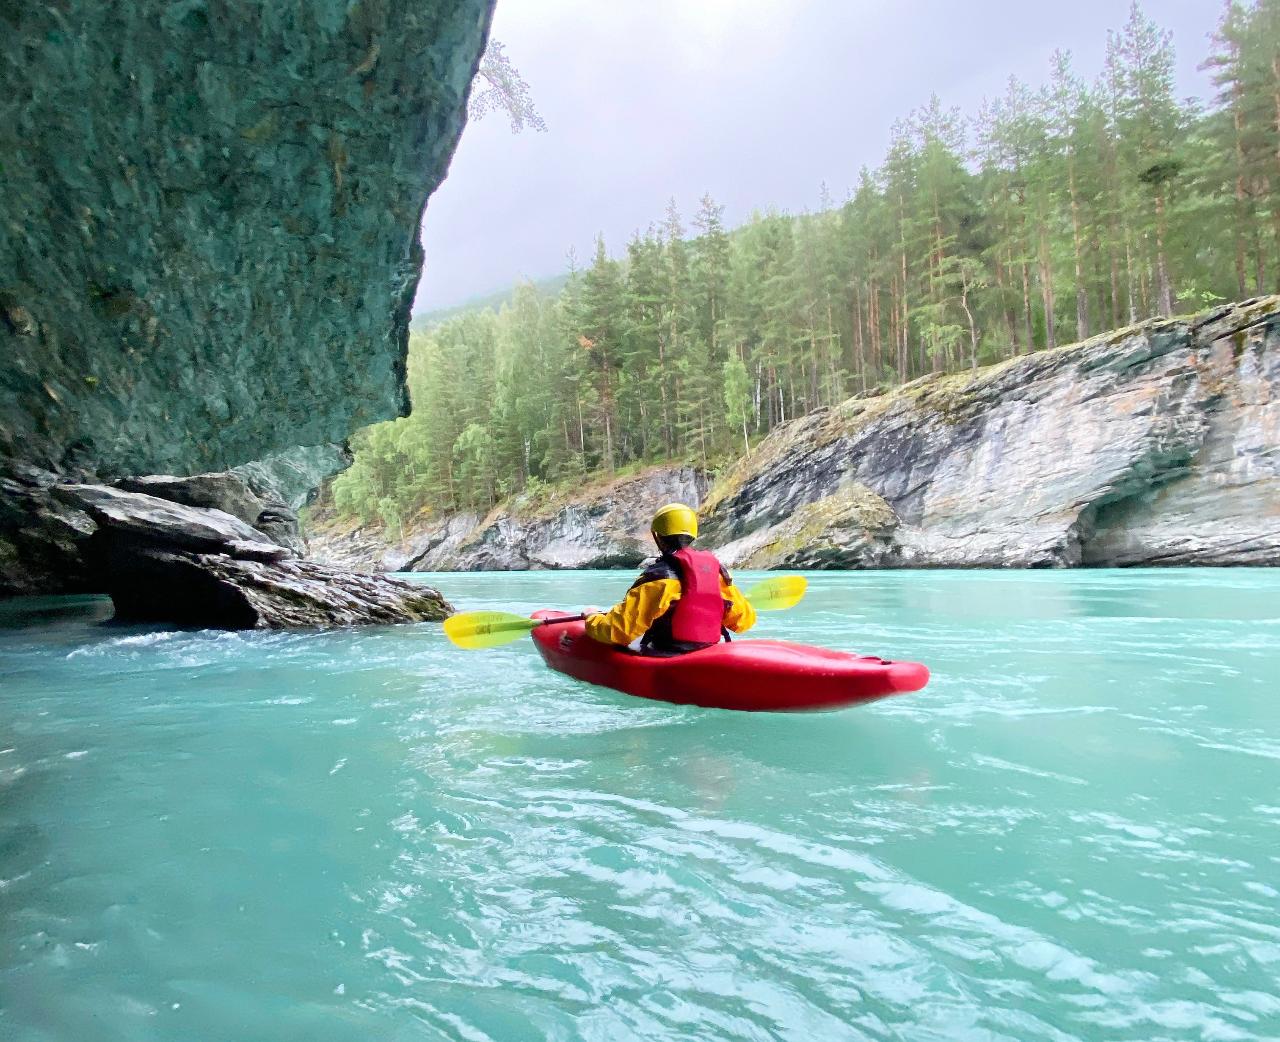 5hr Våttkort Introduction Course in River Kayaking - Sjoa, Norway